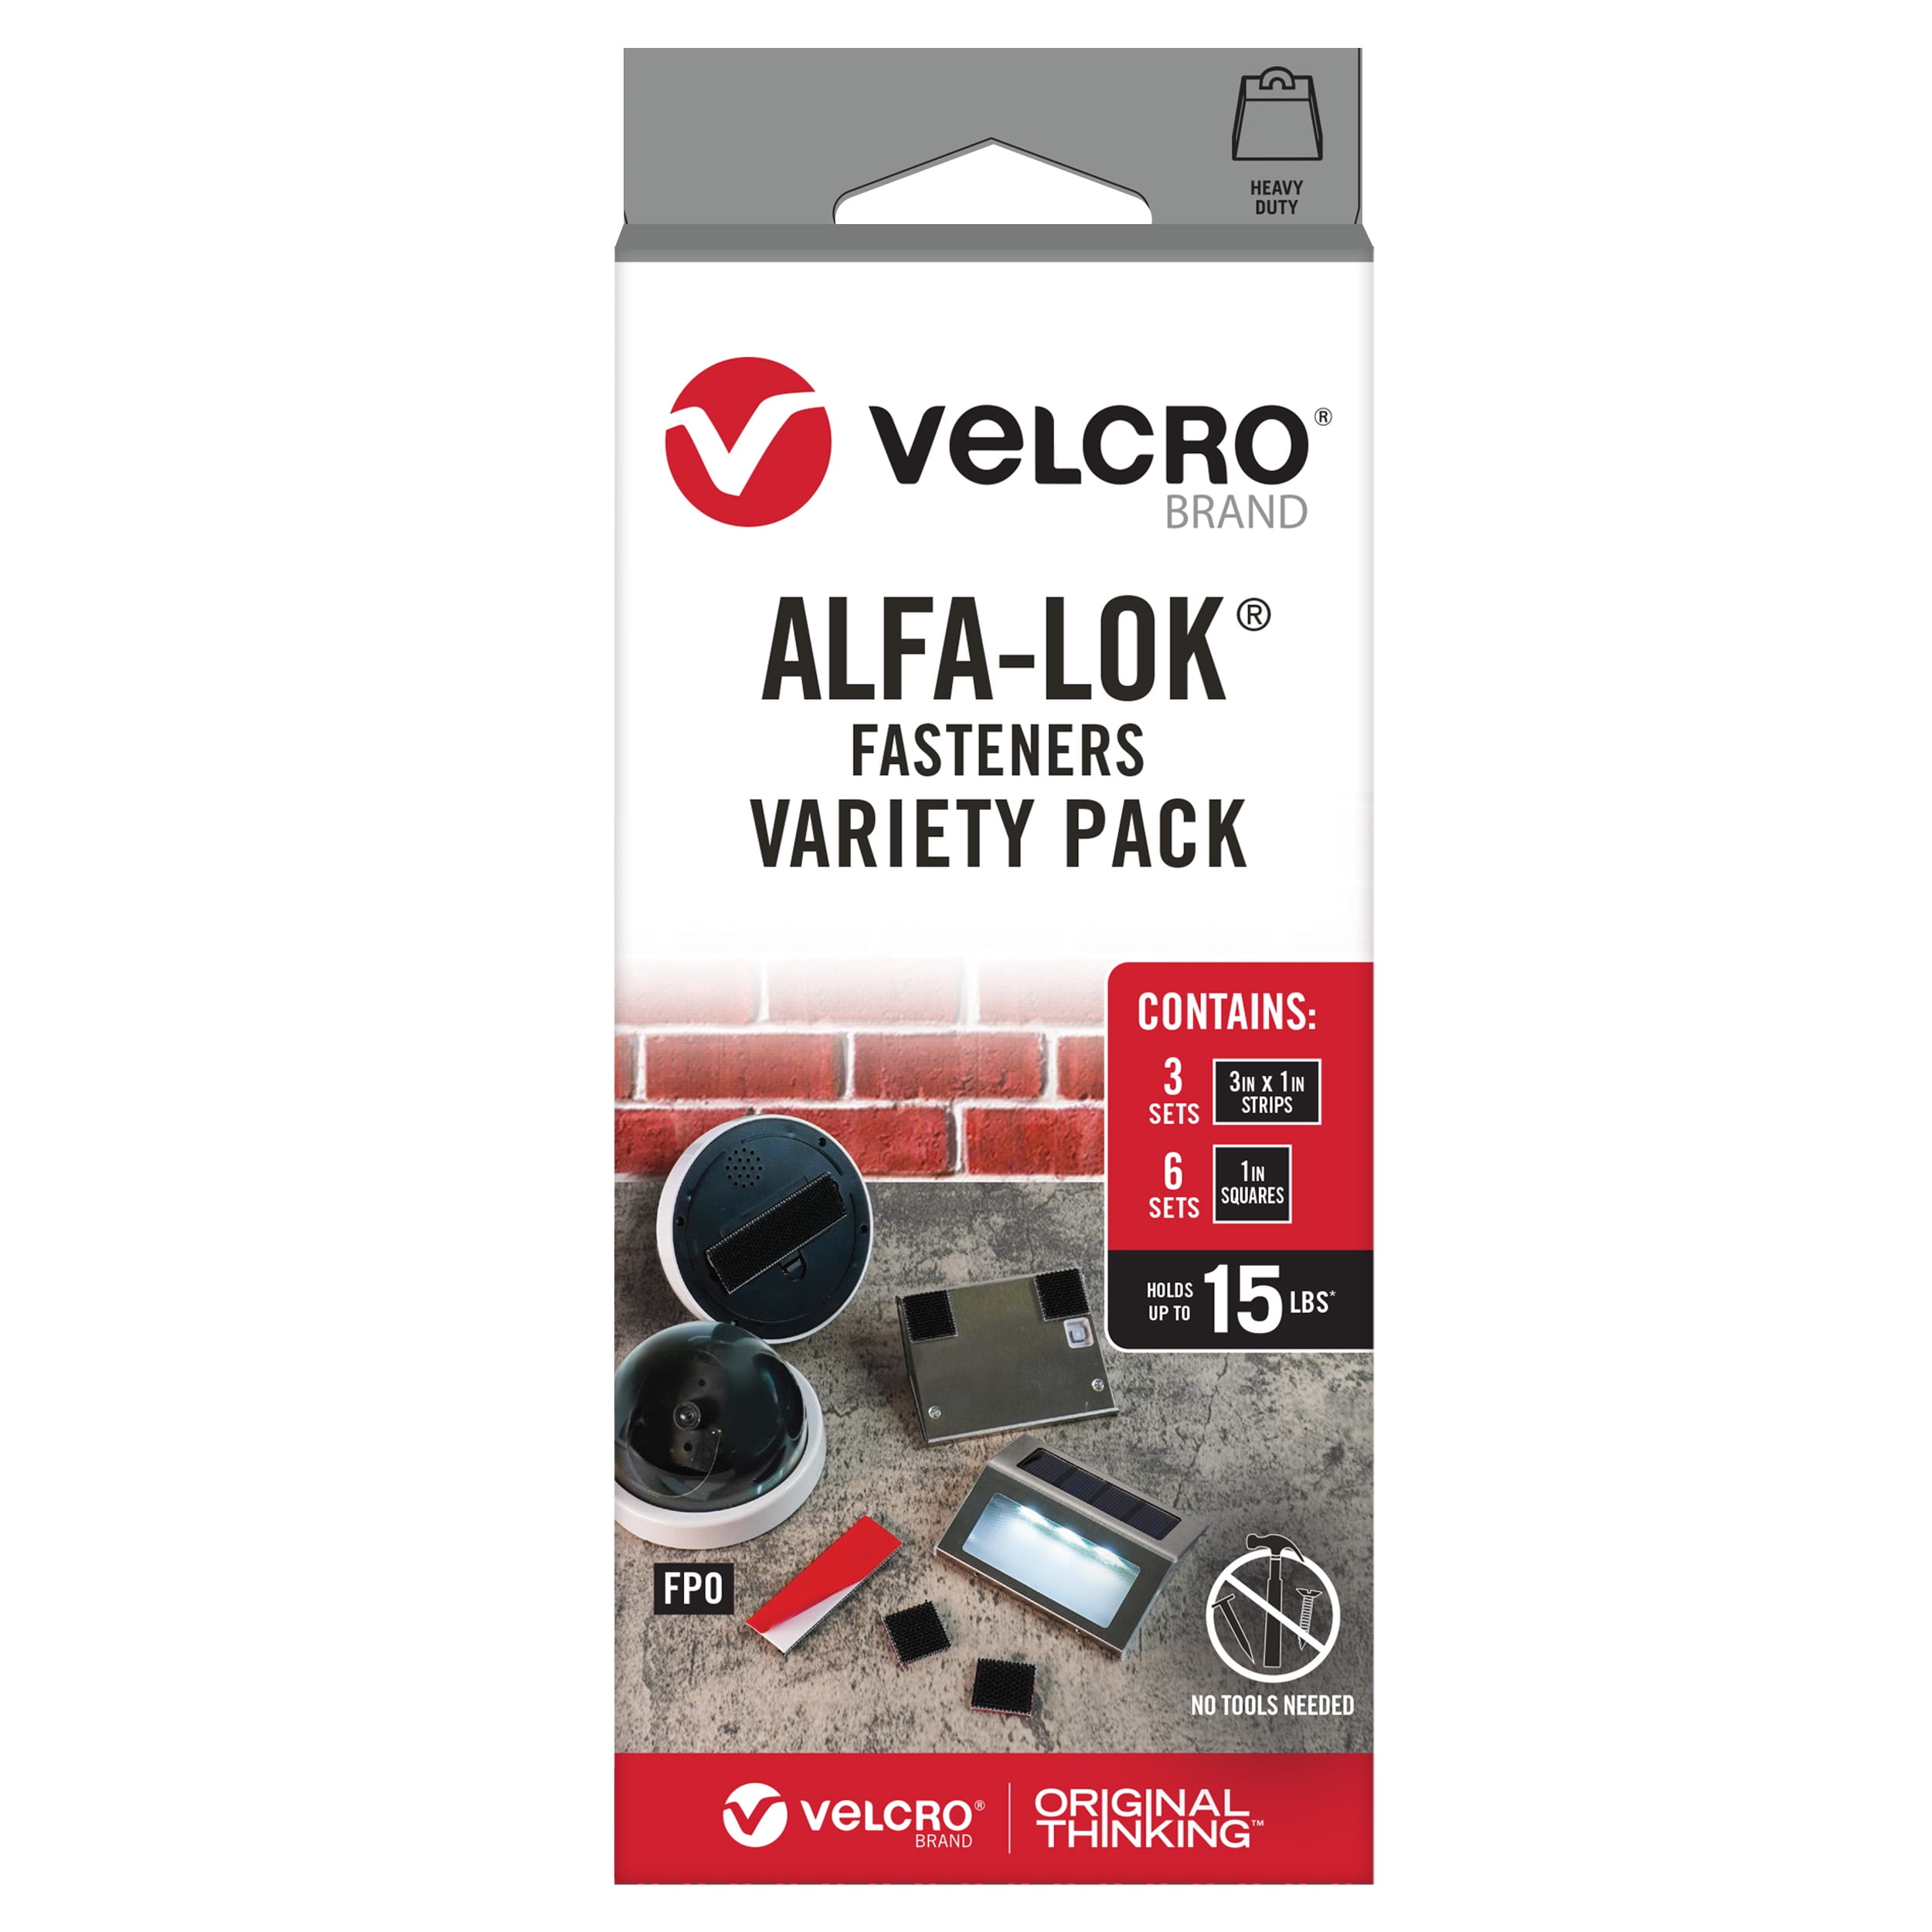  VELCRO Brand HANGables Permanent Adhesive Hooks